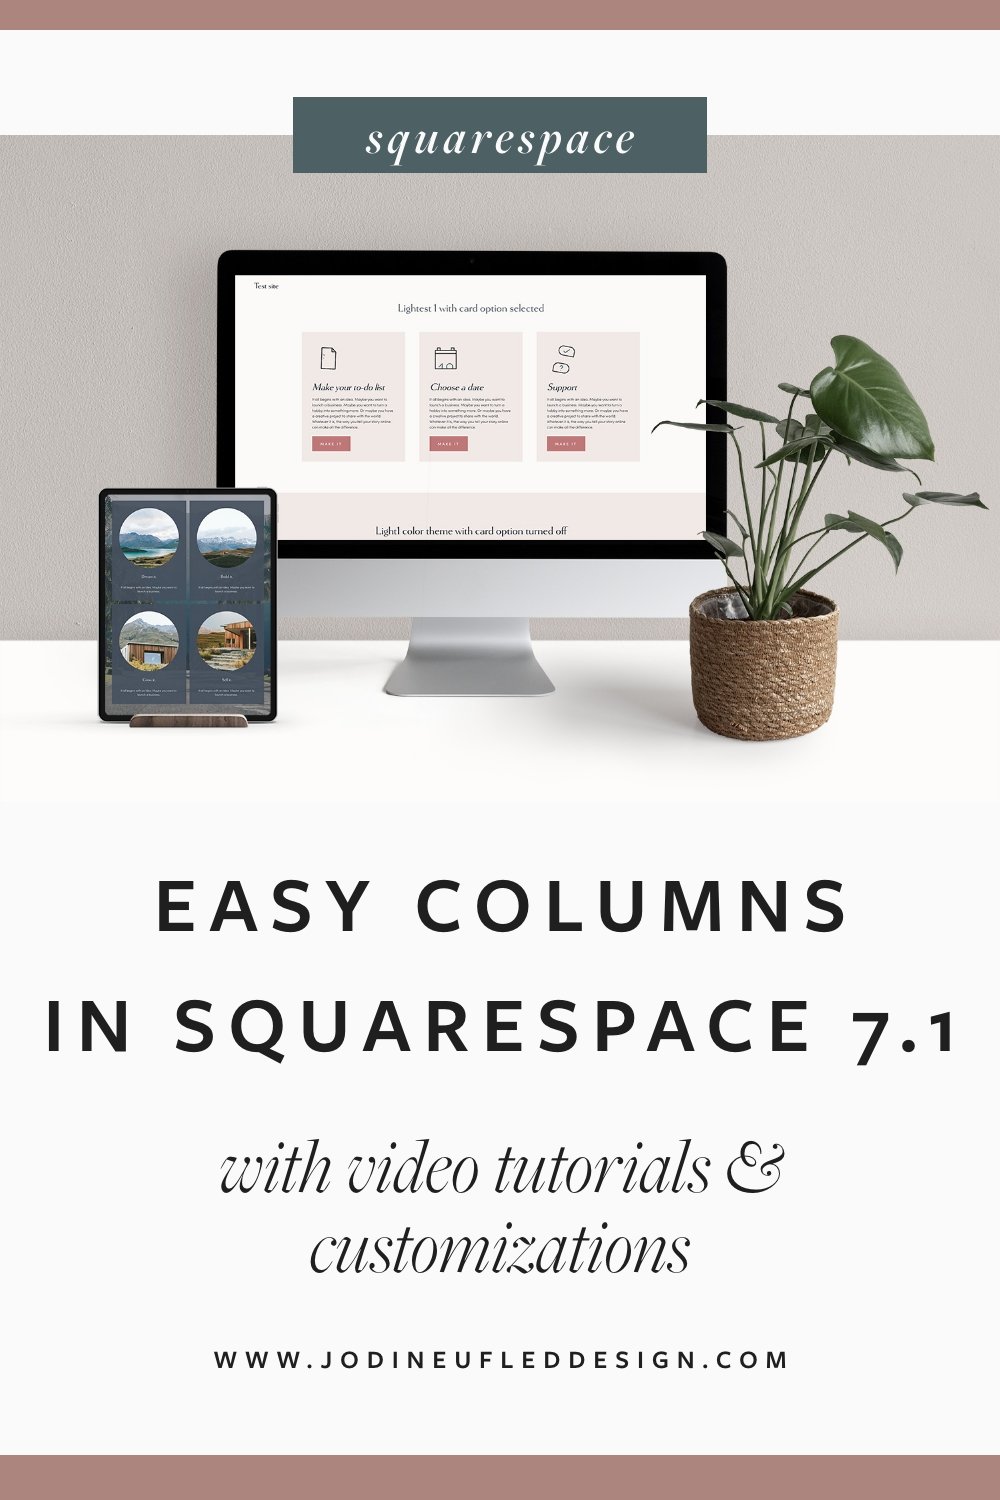 Easy columns in Squarespace 7.1 by Jodi Neufeld Design | pinterest graphic